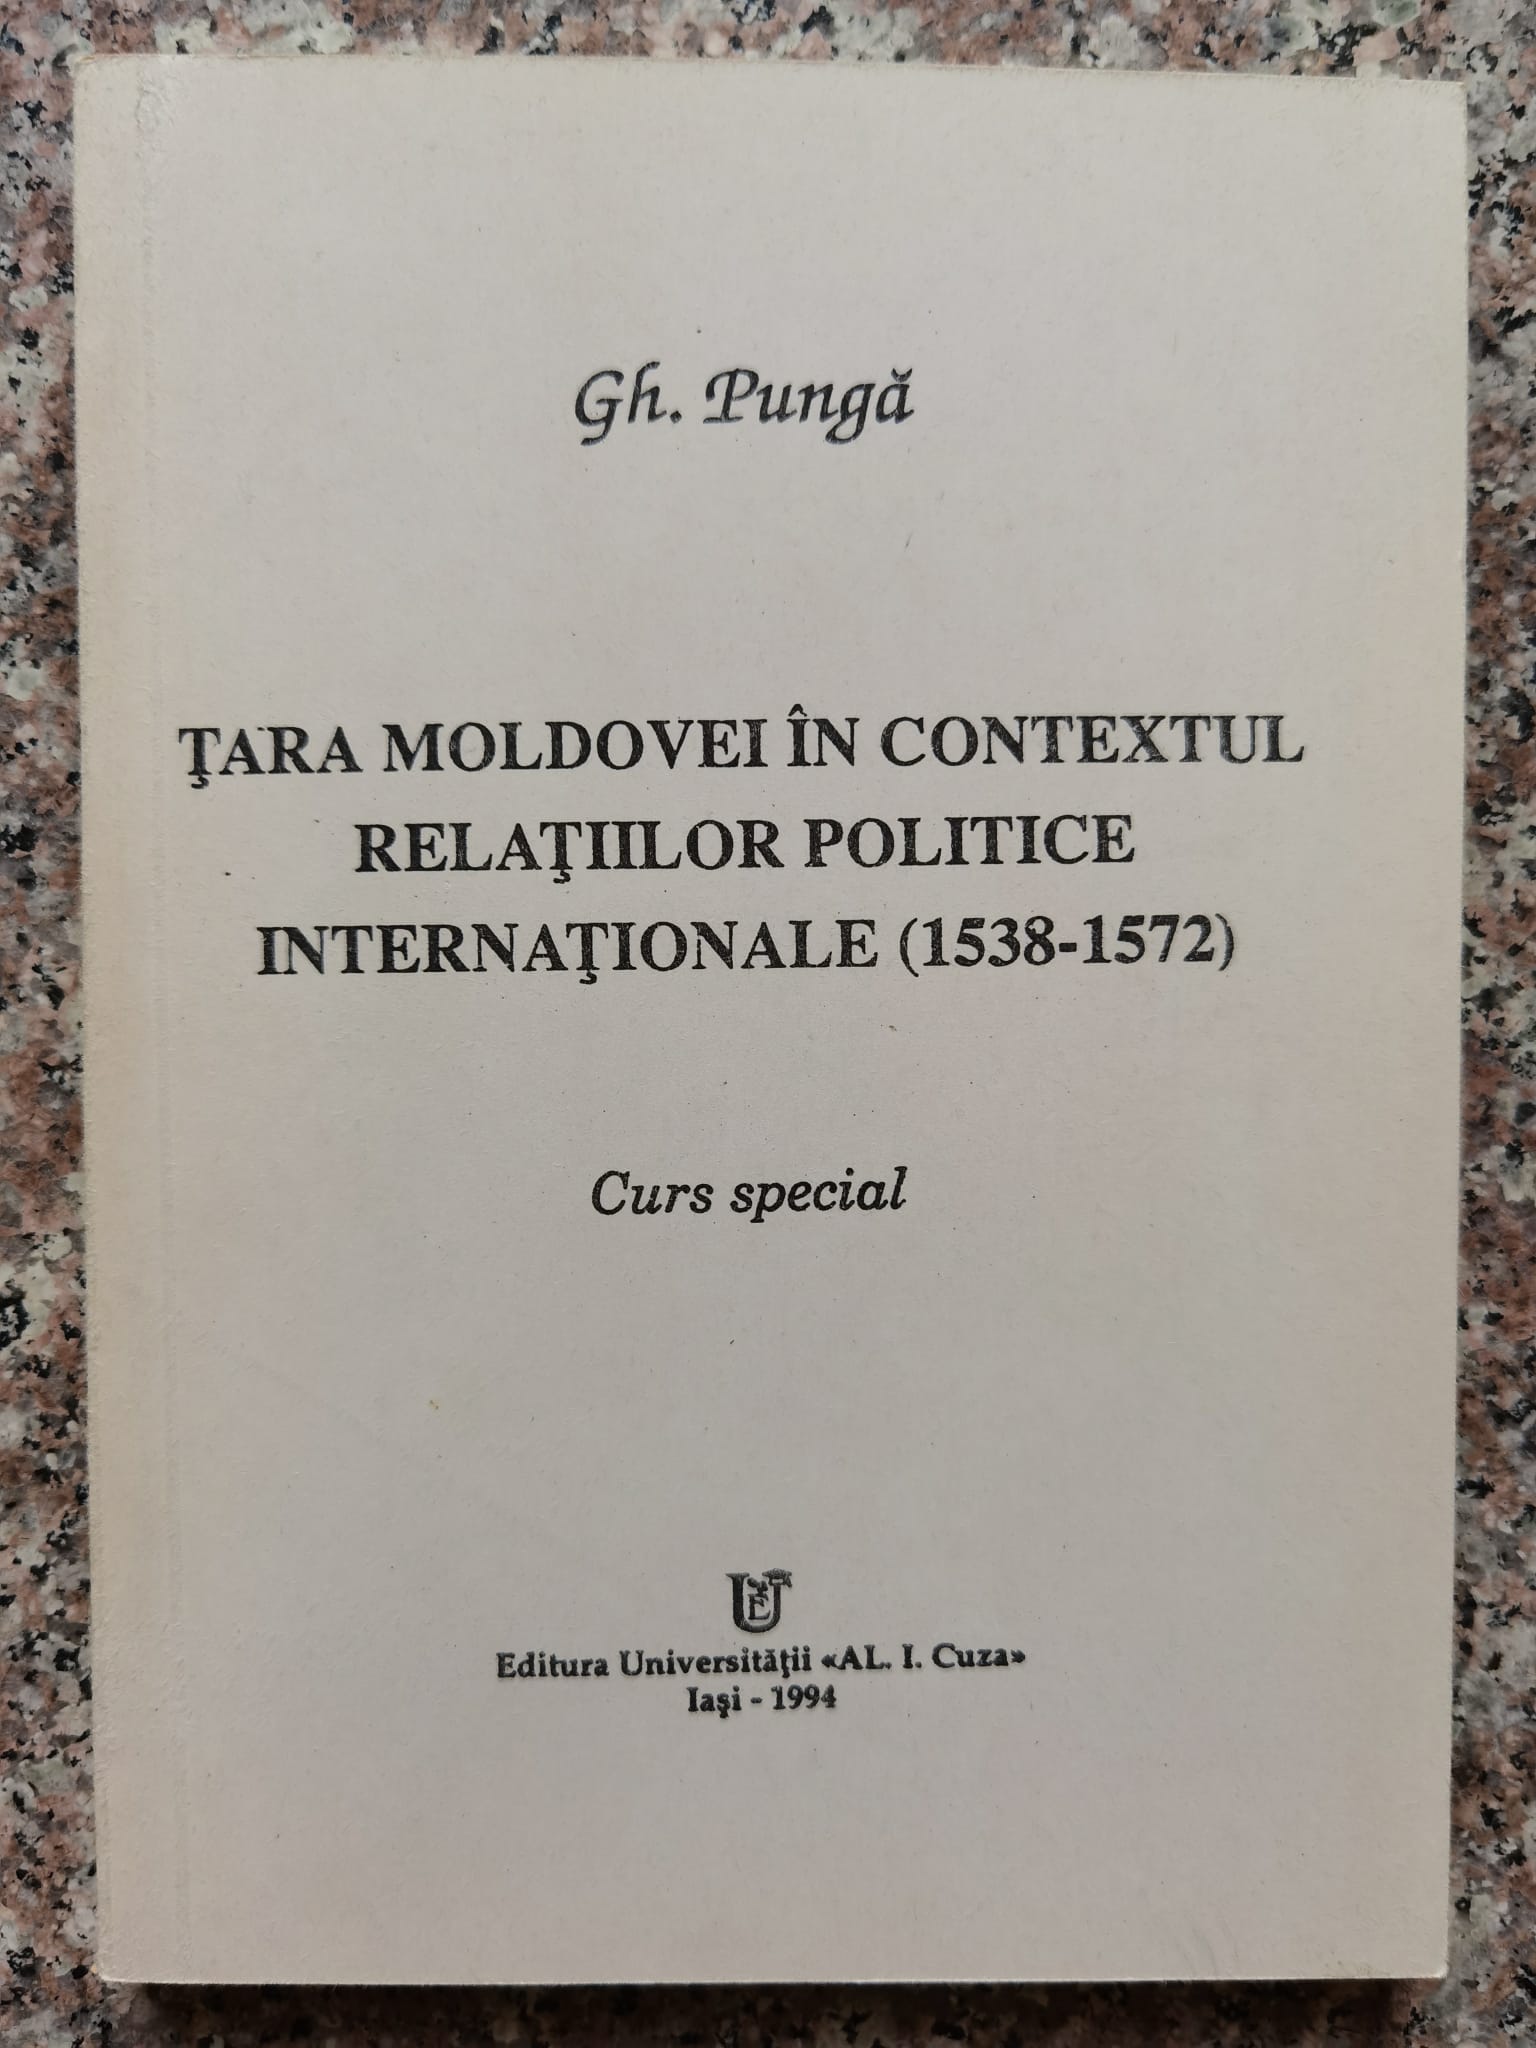 tara moldovei in contextul relatiilor politice internationale (1538-1572) - curs special             gh. punga                                                                                           